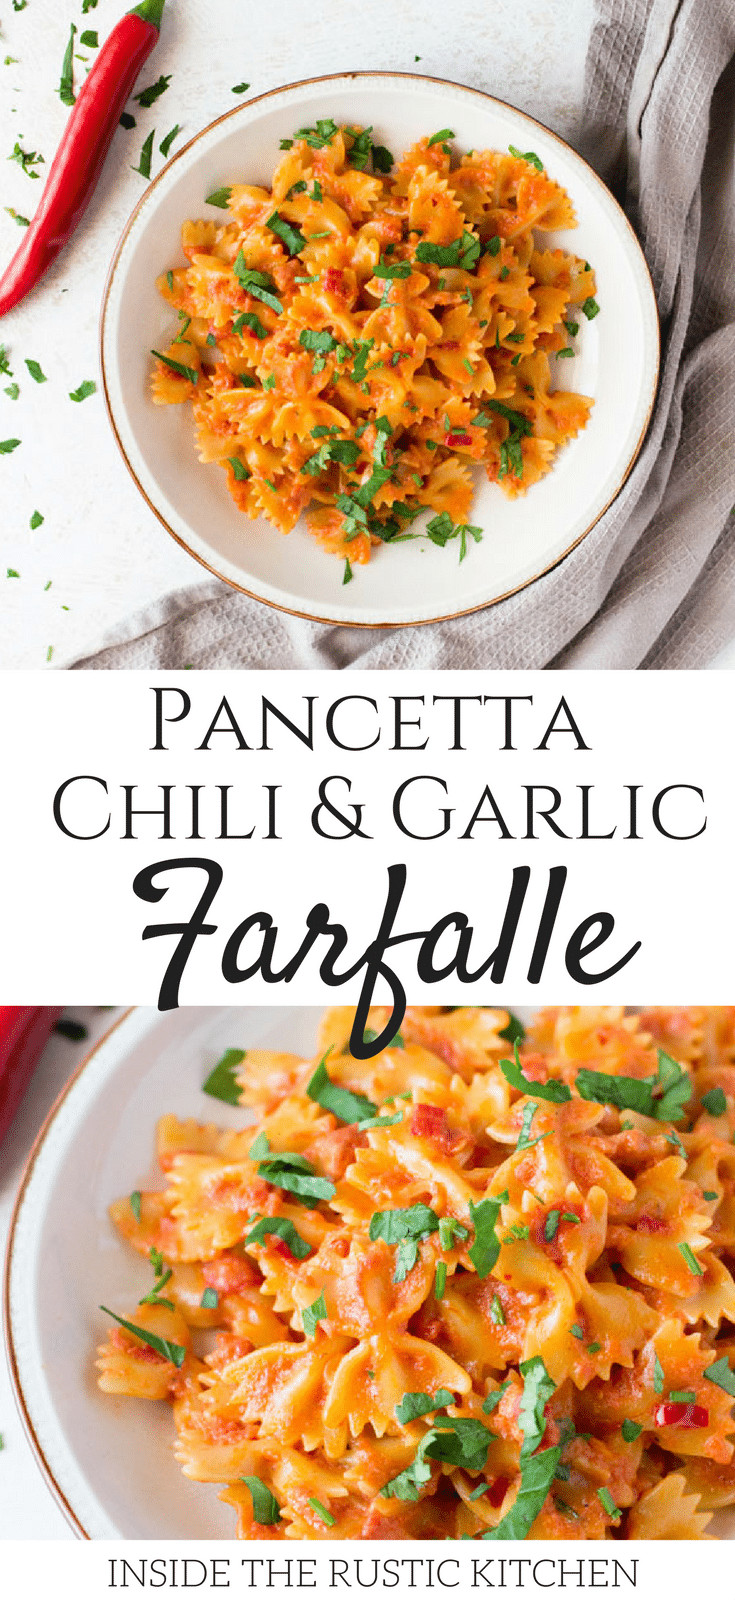 Farfalle Pasta Recipes Vegetarian
 Farfalle Pasta with pancetta Chili and Garlic